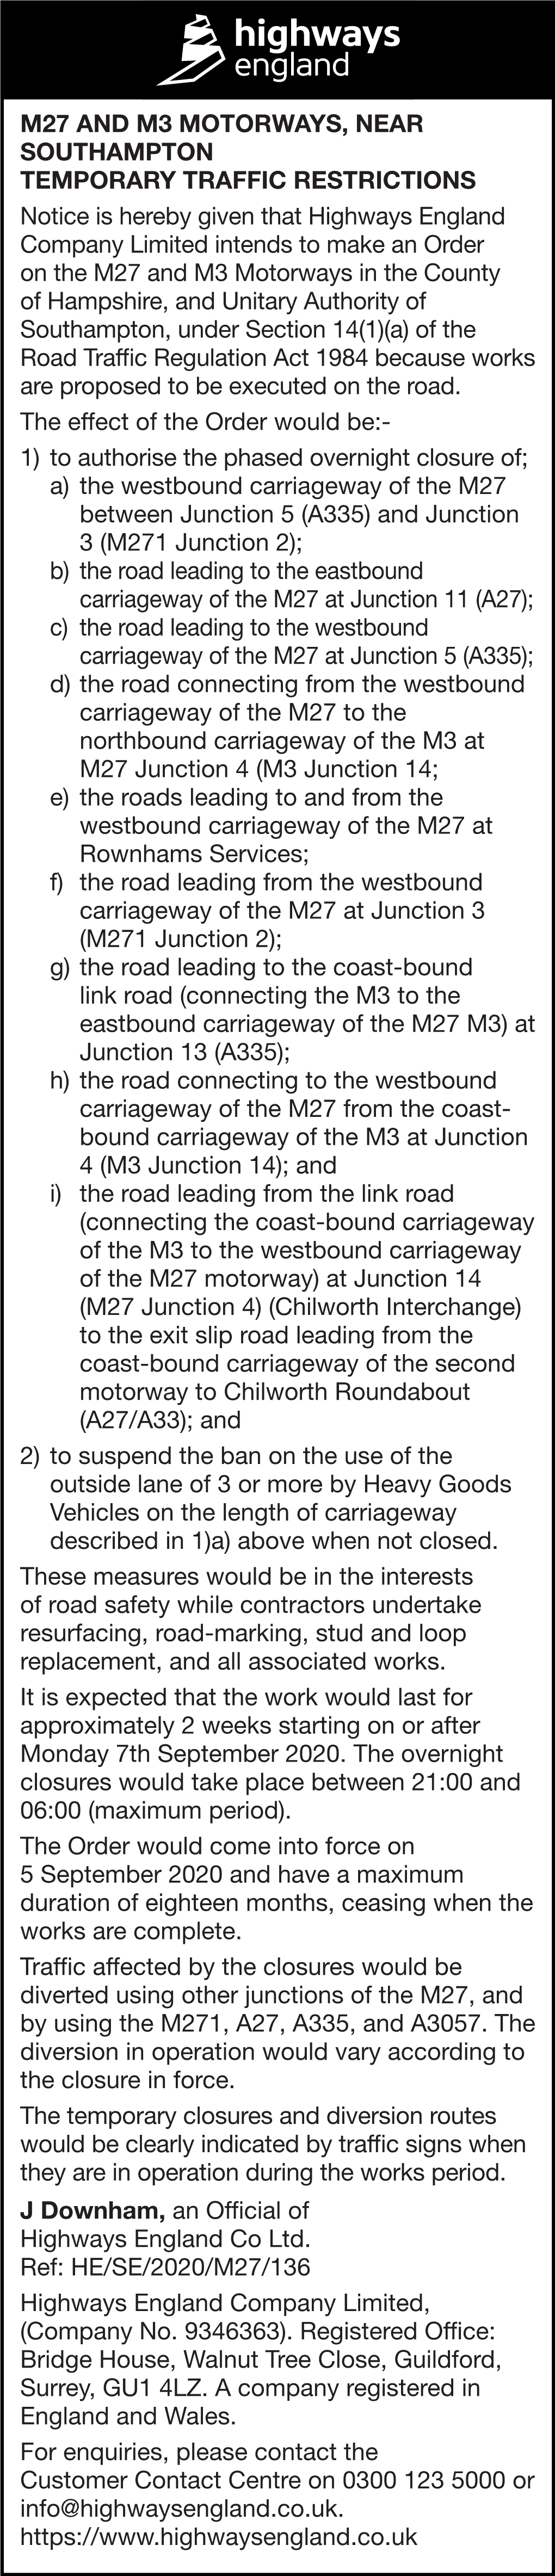 M27 and M3 Motorways, Near Southampton Temporary